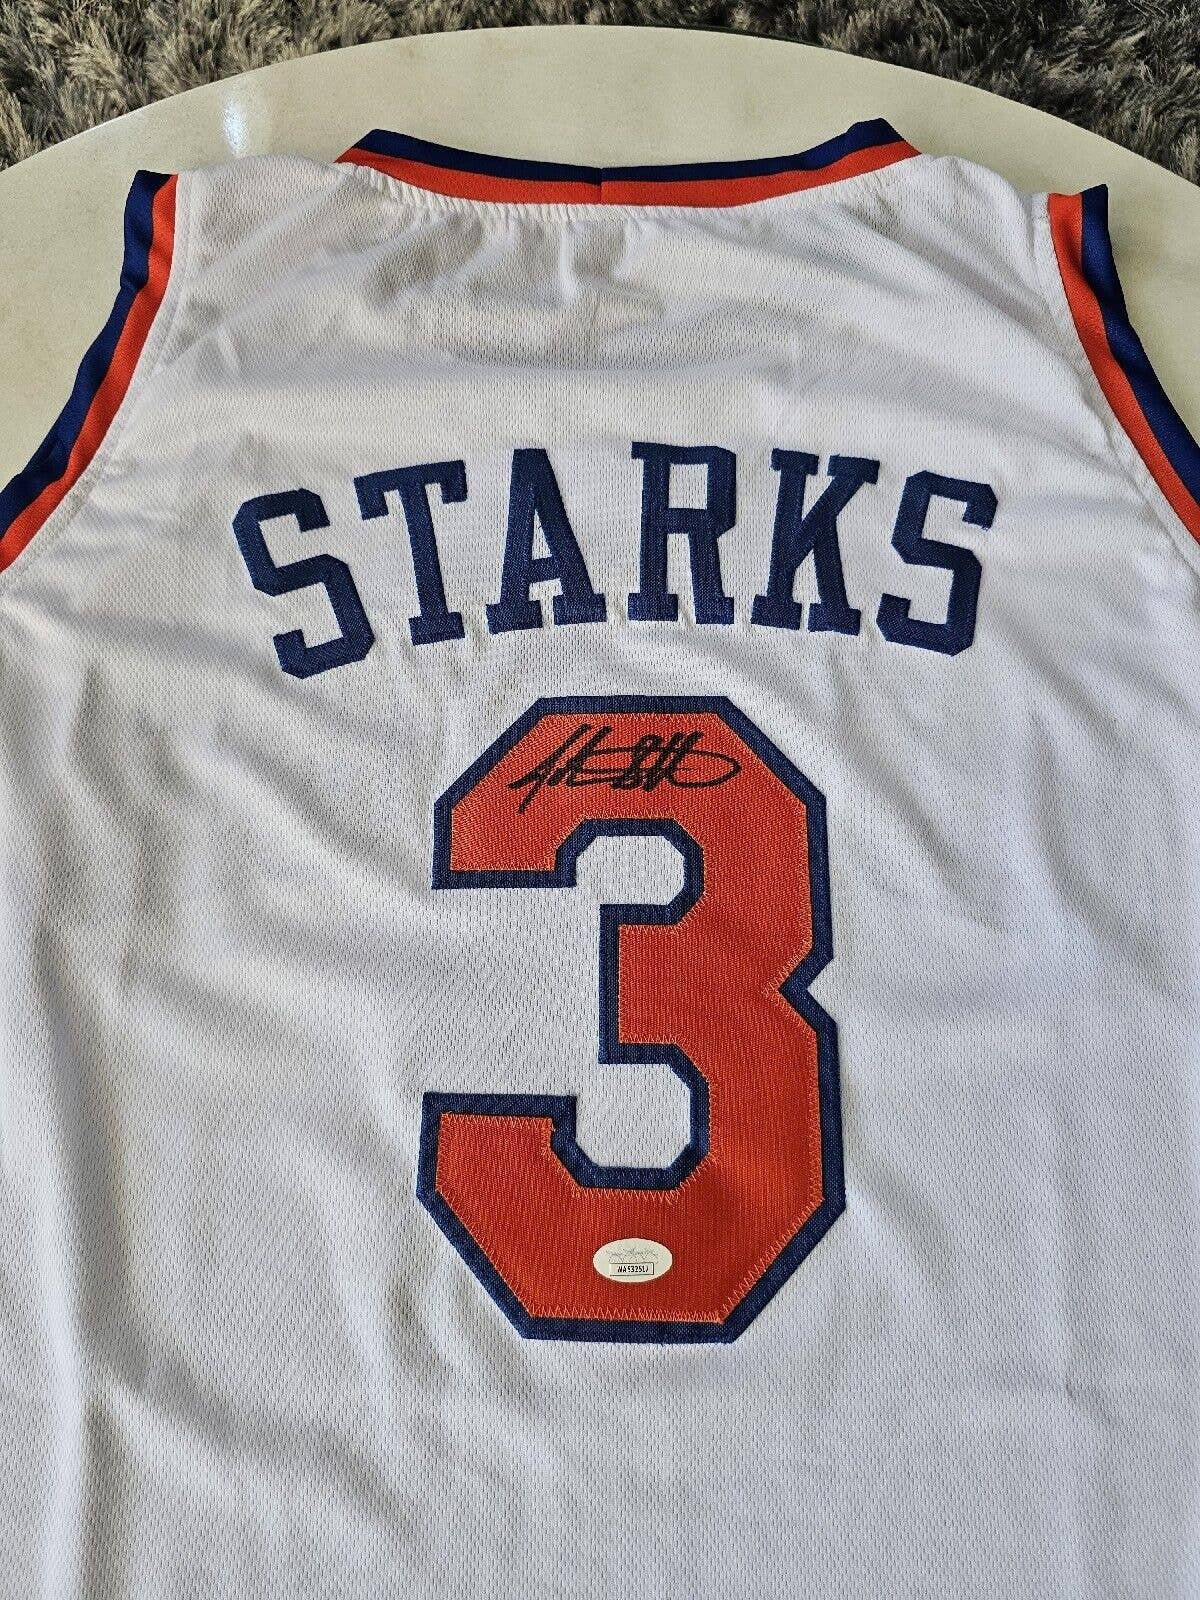 Shirts, John Starks Autographedsigned Jersey Jsa Coa New York Knicks Ny